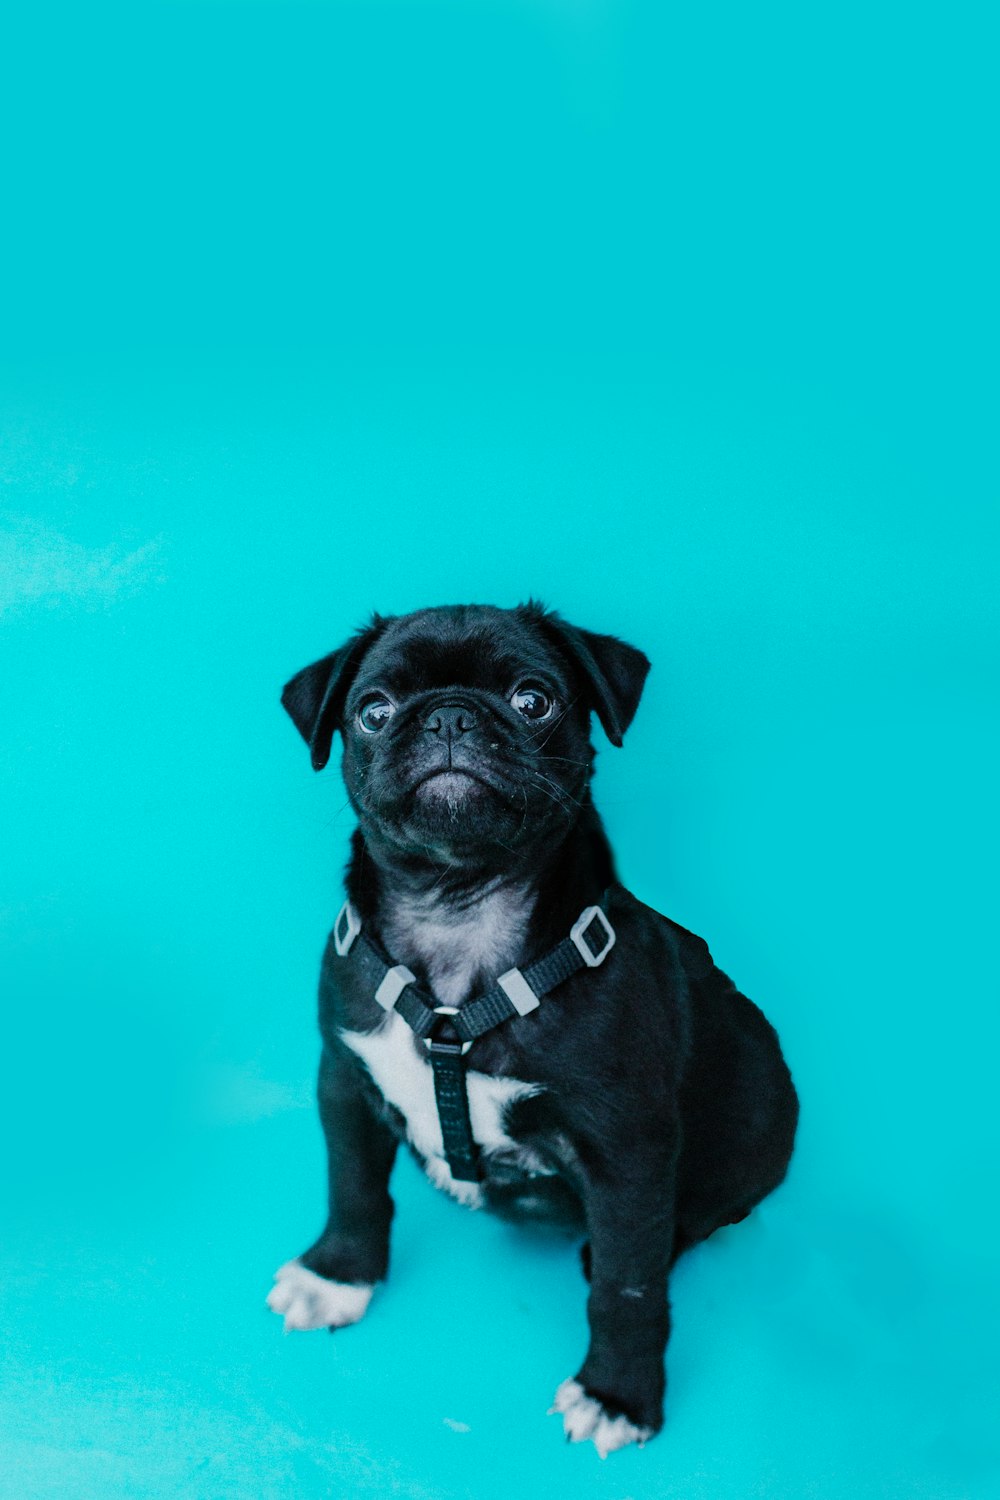 black pug puppy on green textile